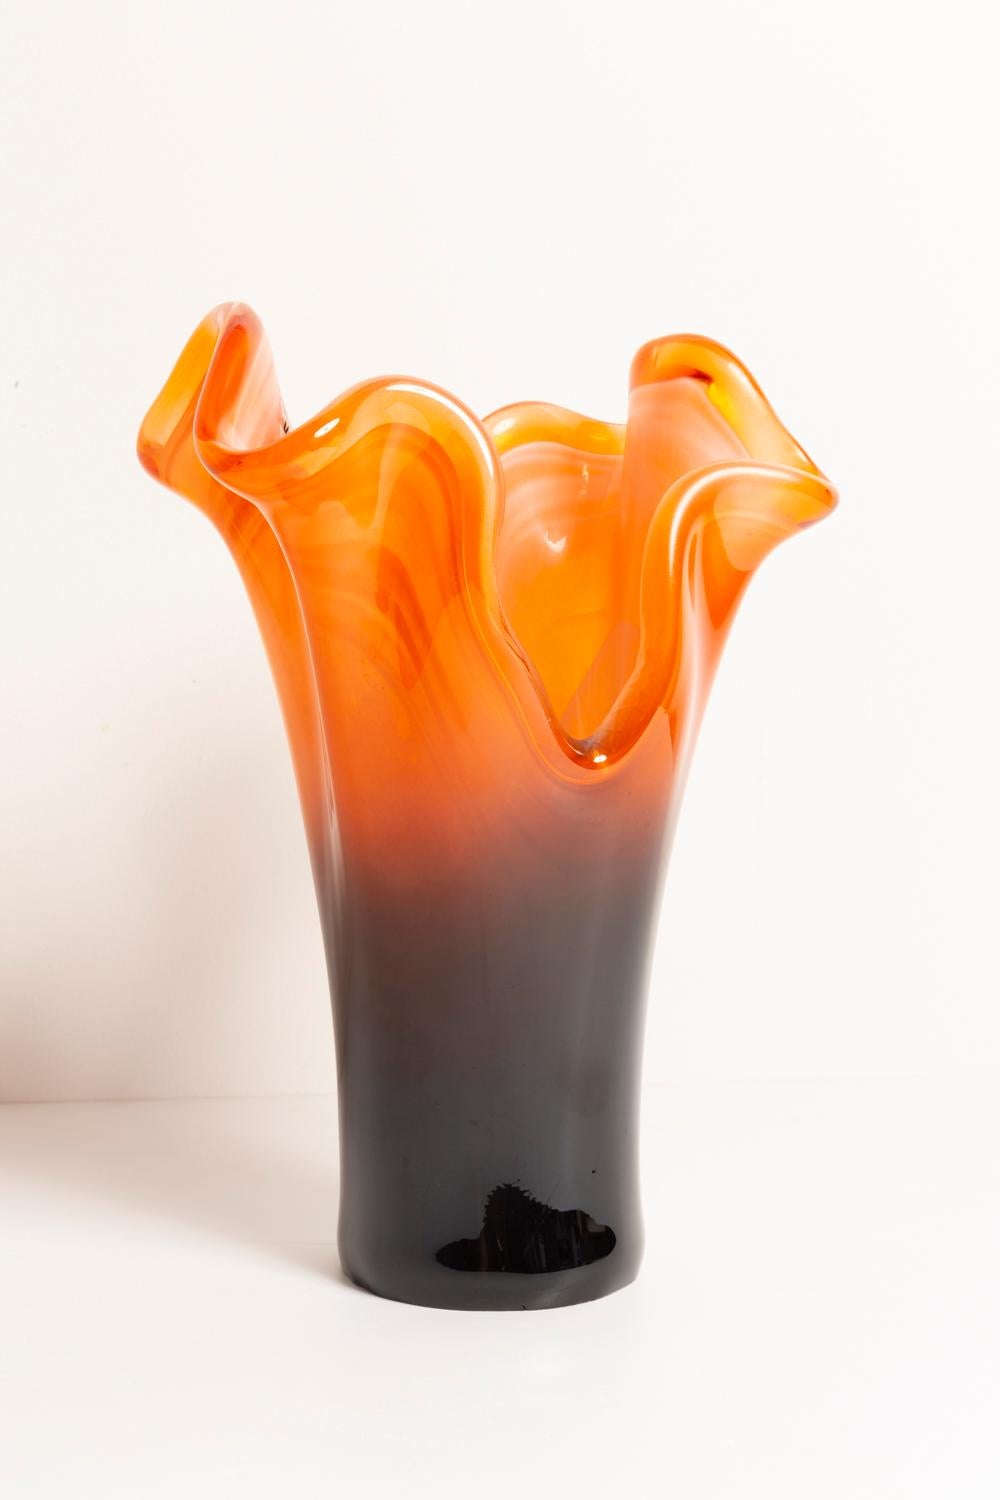 Midcentury Vintage Orange and Black Murano Glass Vase, Italy, 2000s For Sale 4